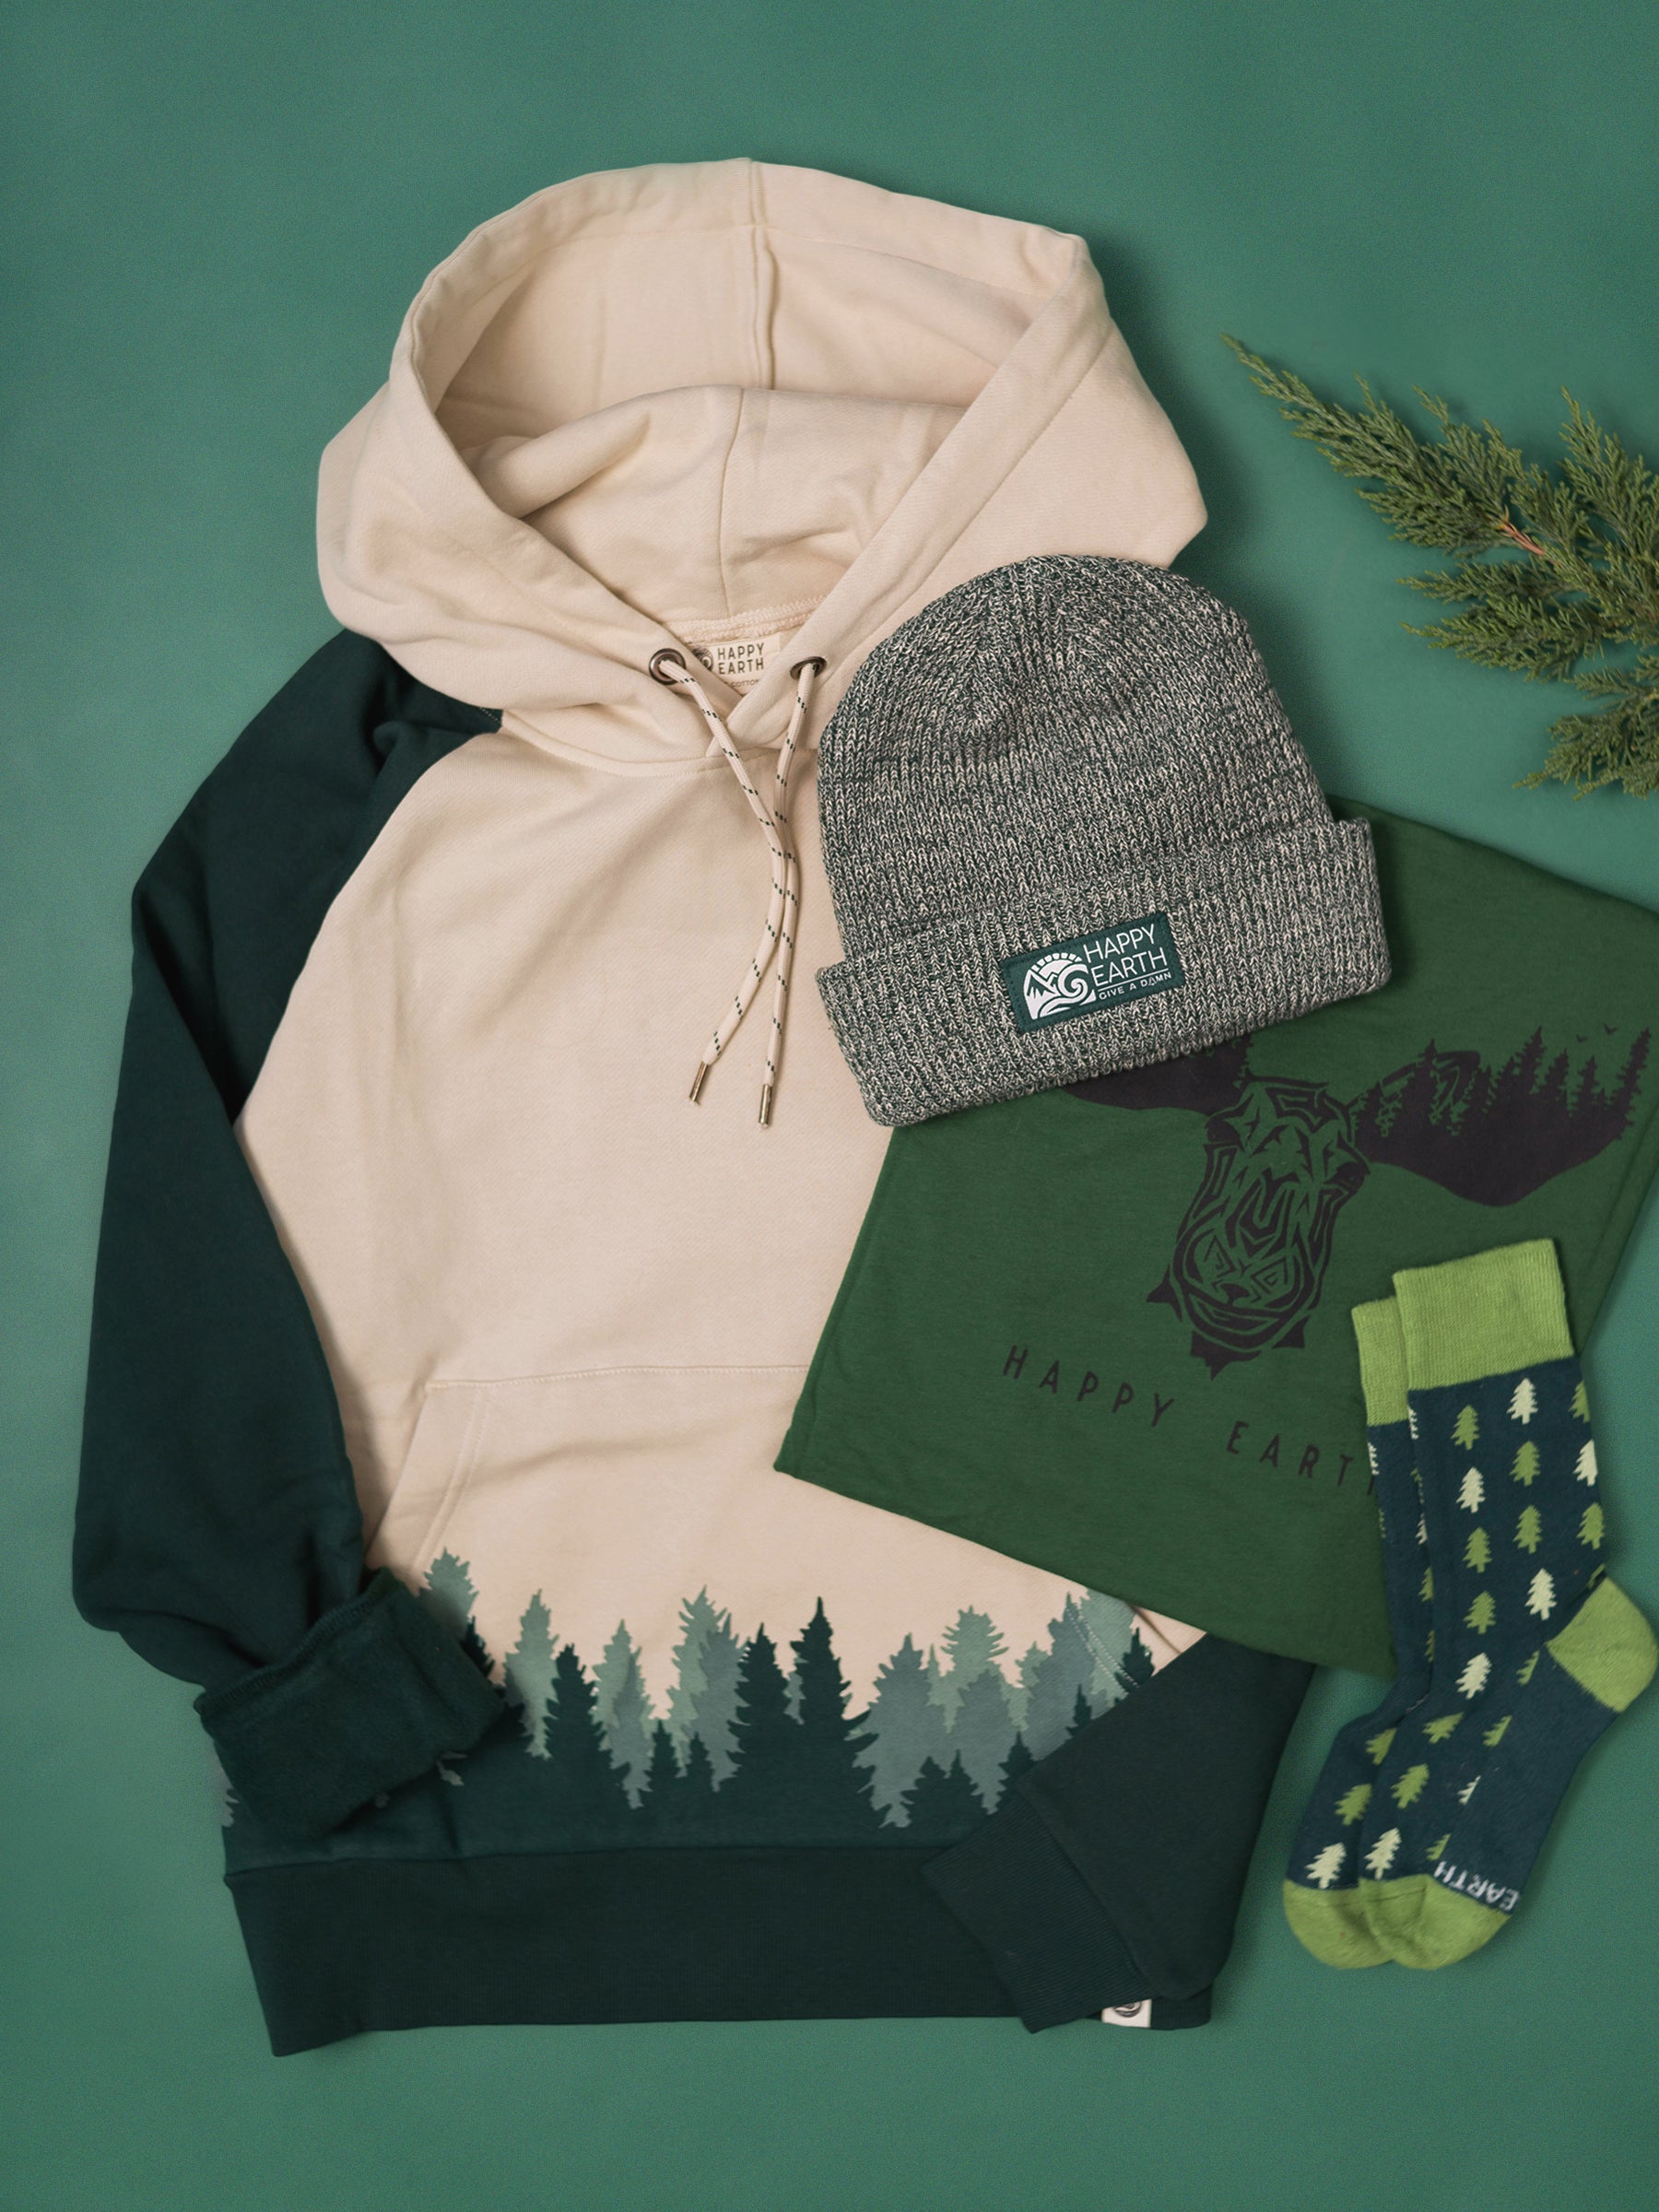 All-gender Fading Forest Organic Fleece Hoodie Sweatshirt - Green/Tan